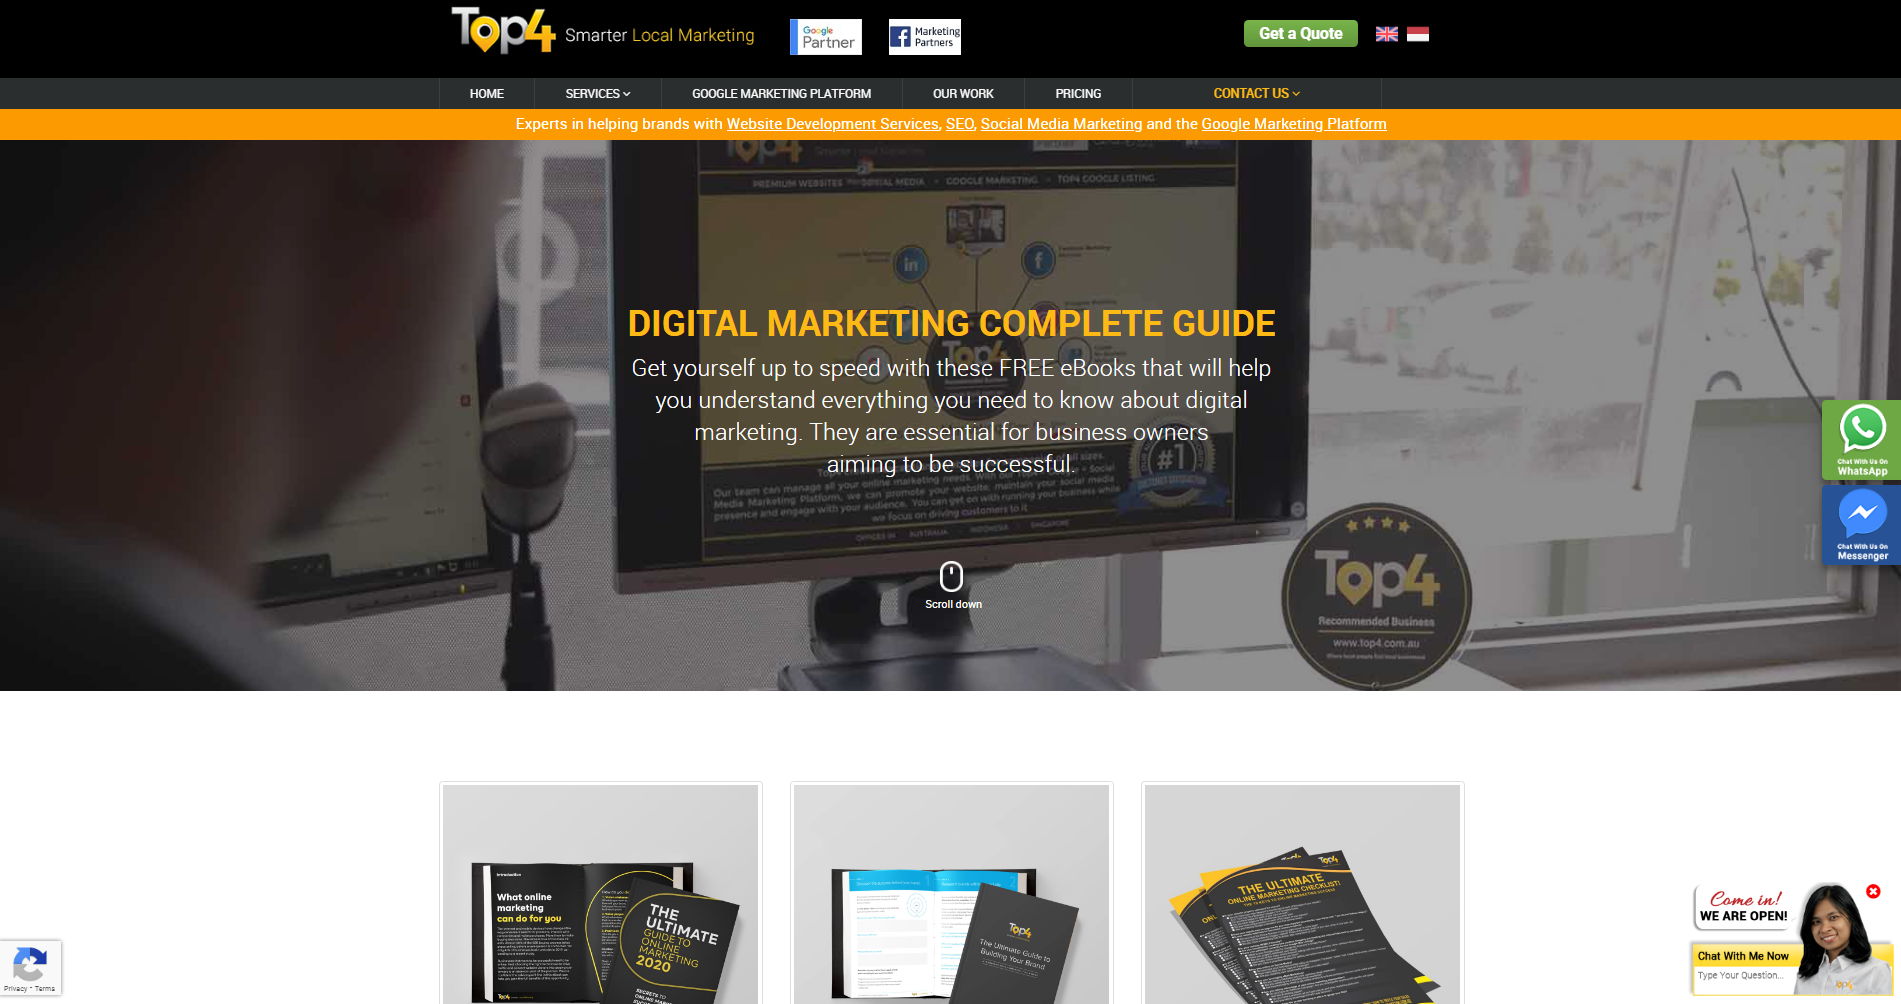 Digital Marketing Complete Guide - Top4 Marketing